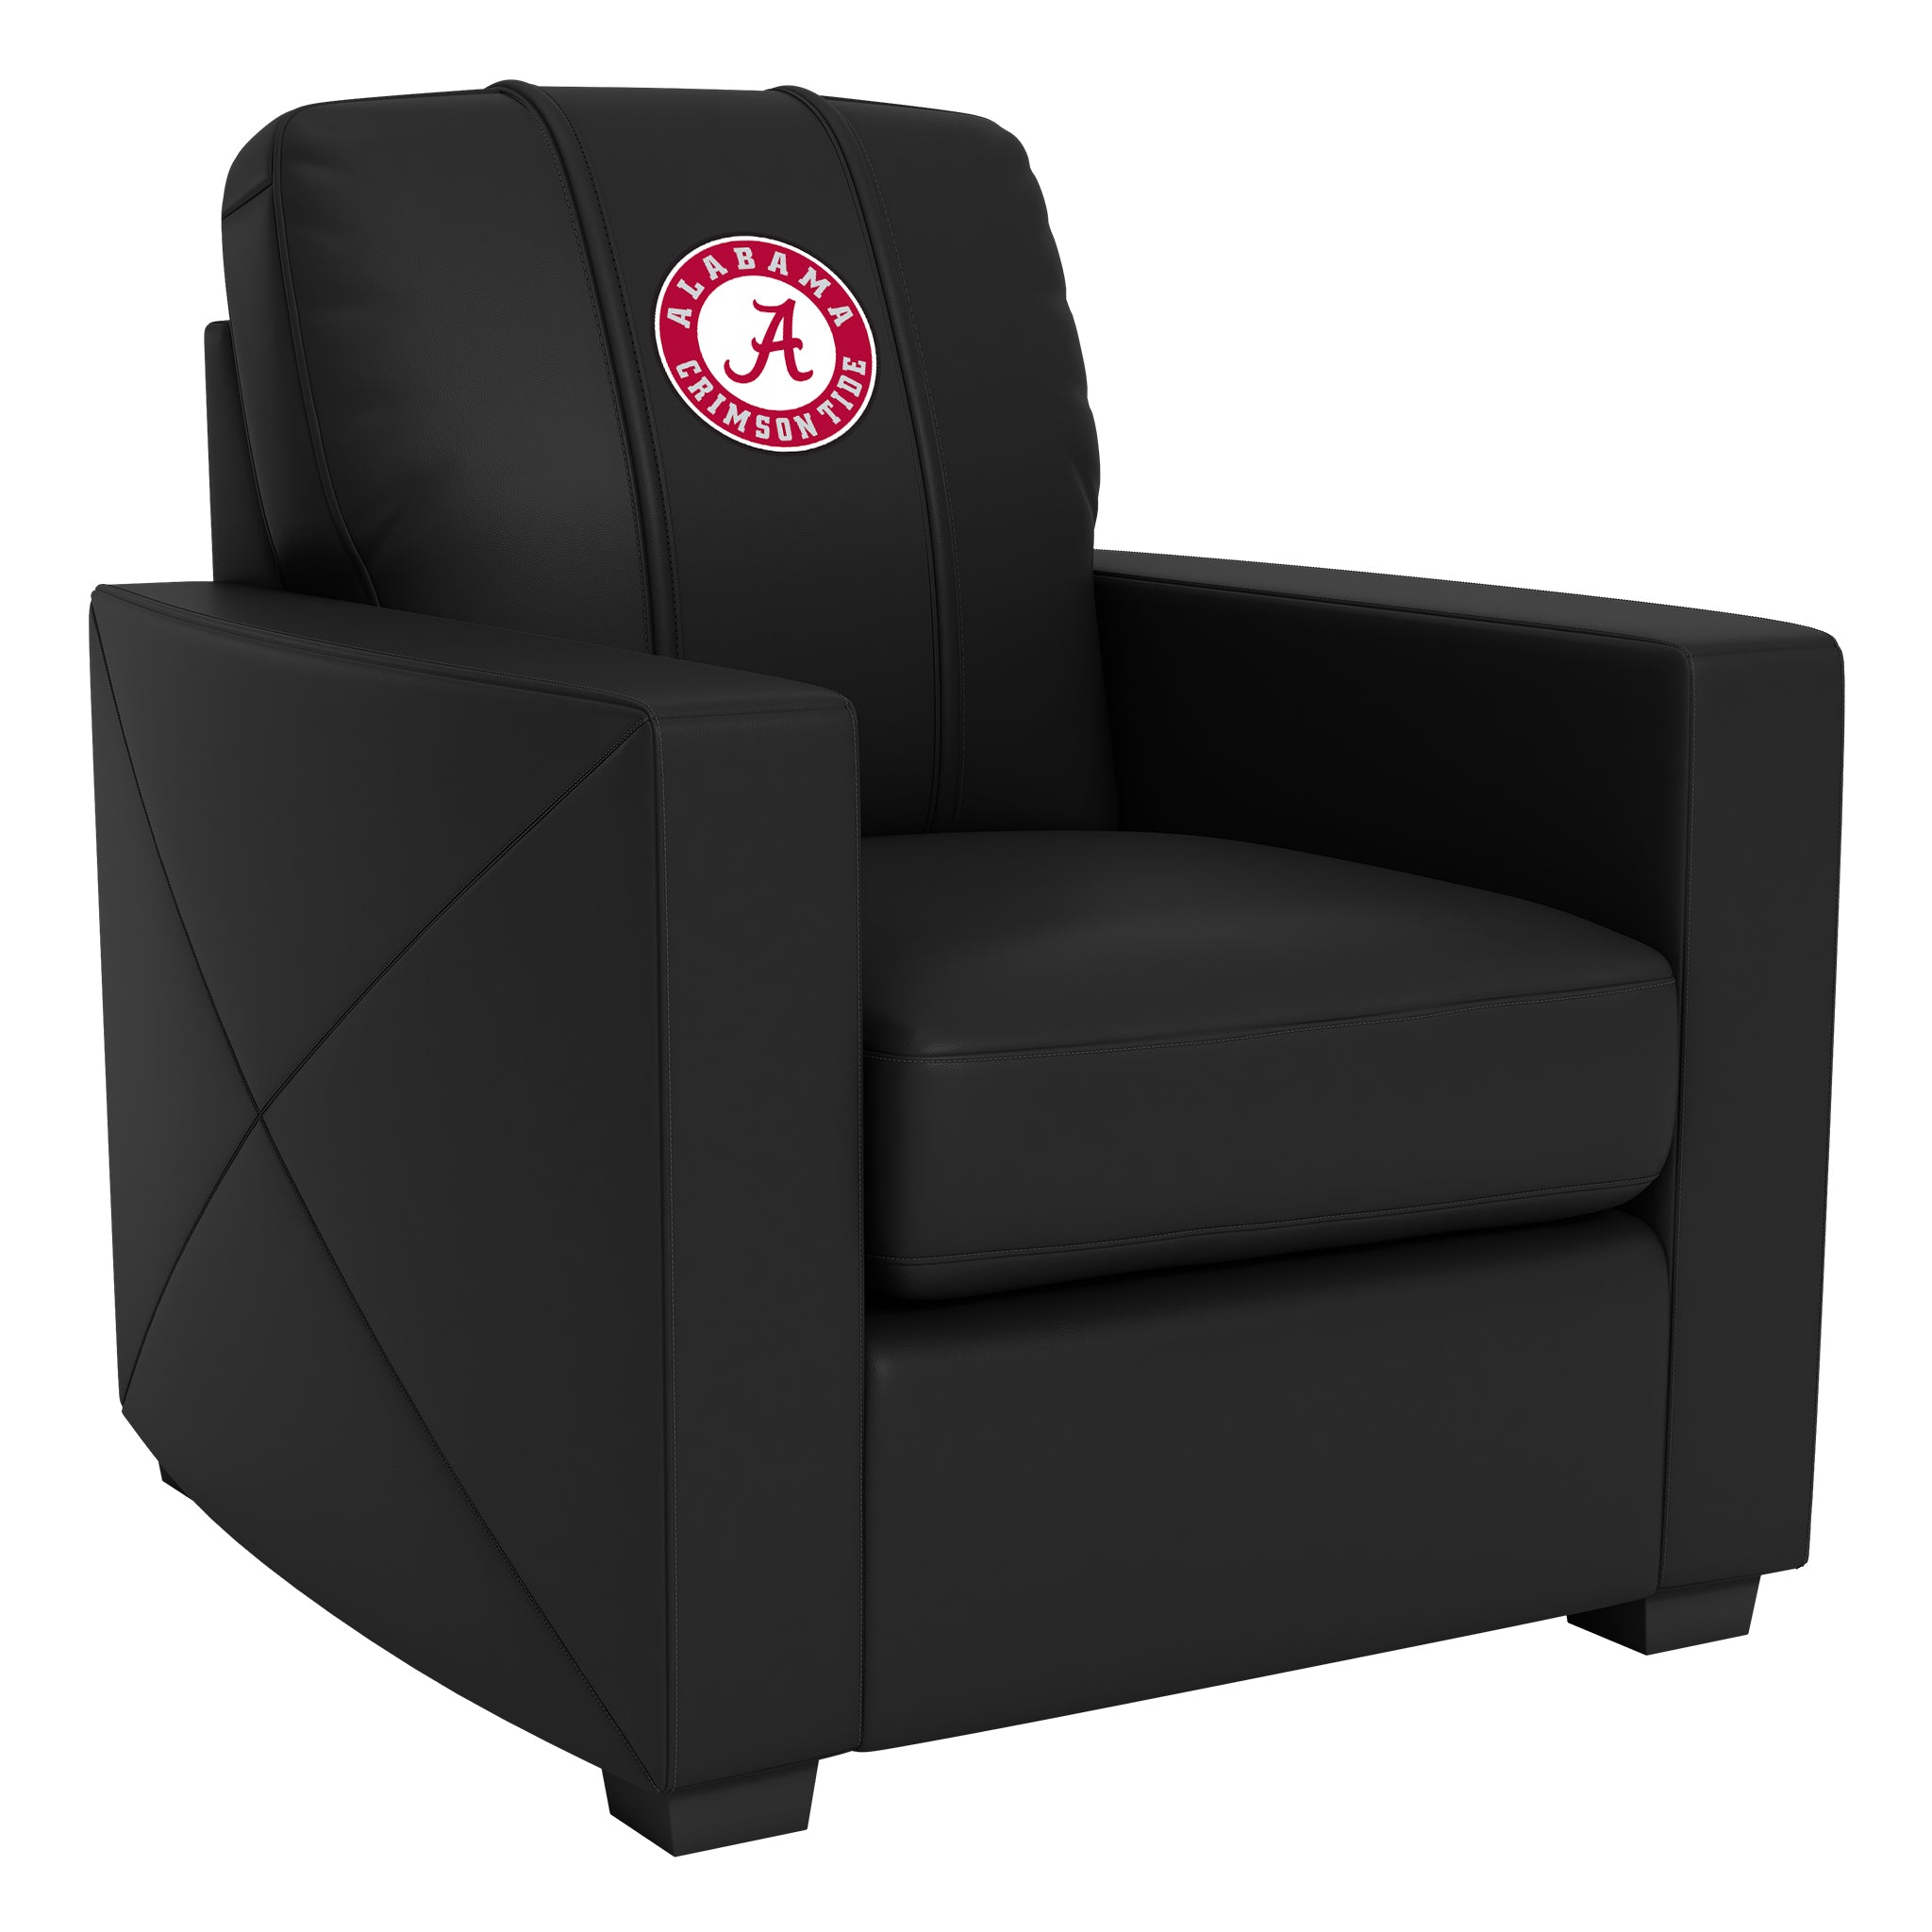 Alabama Crimson Tide Silver Club Chair with Alabama Crimson Tide Logo